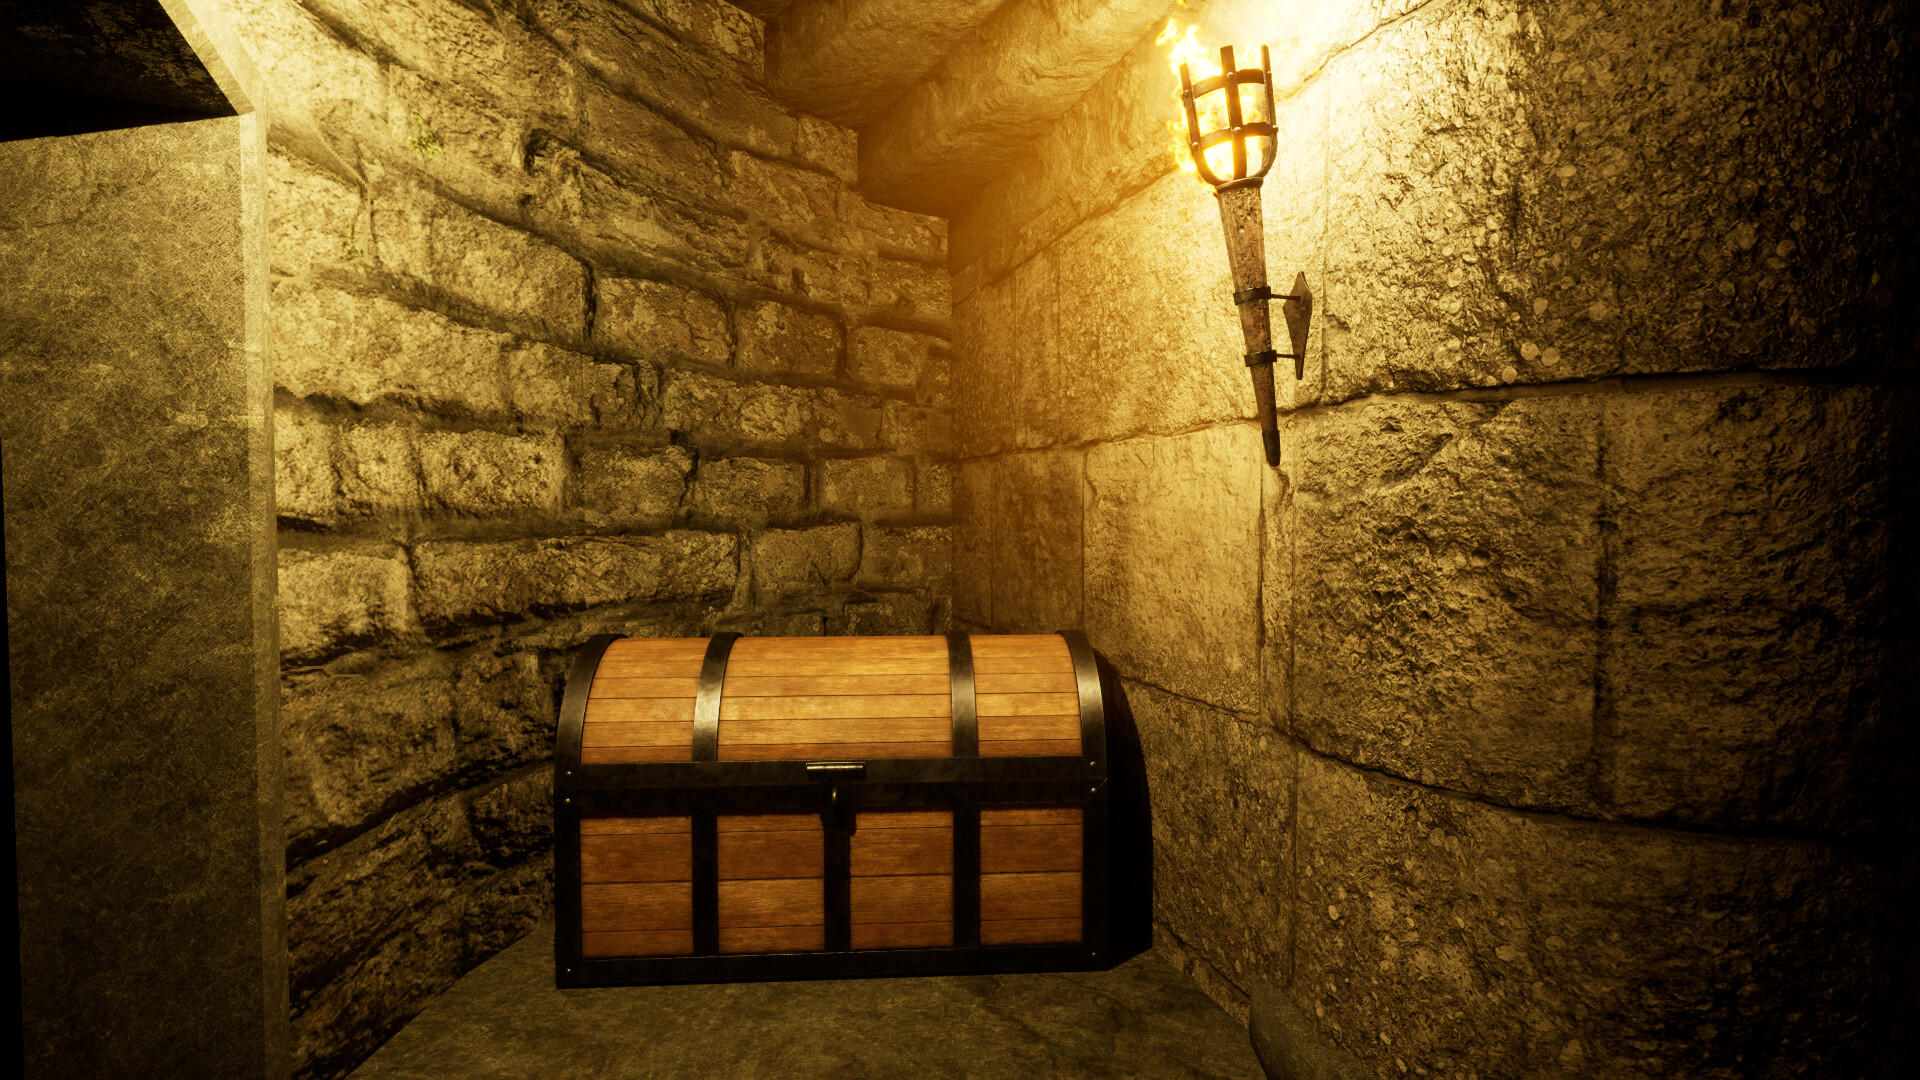 The Magic World 2: Curse of the Ancients screenshot game